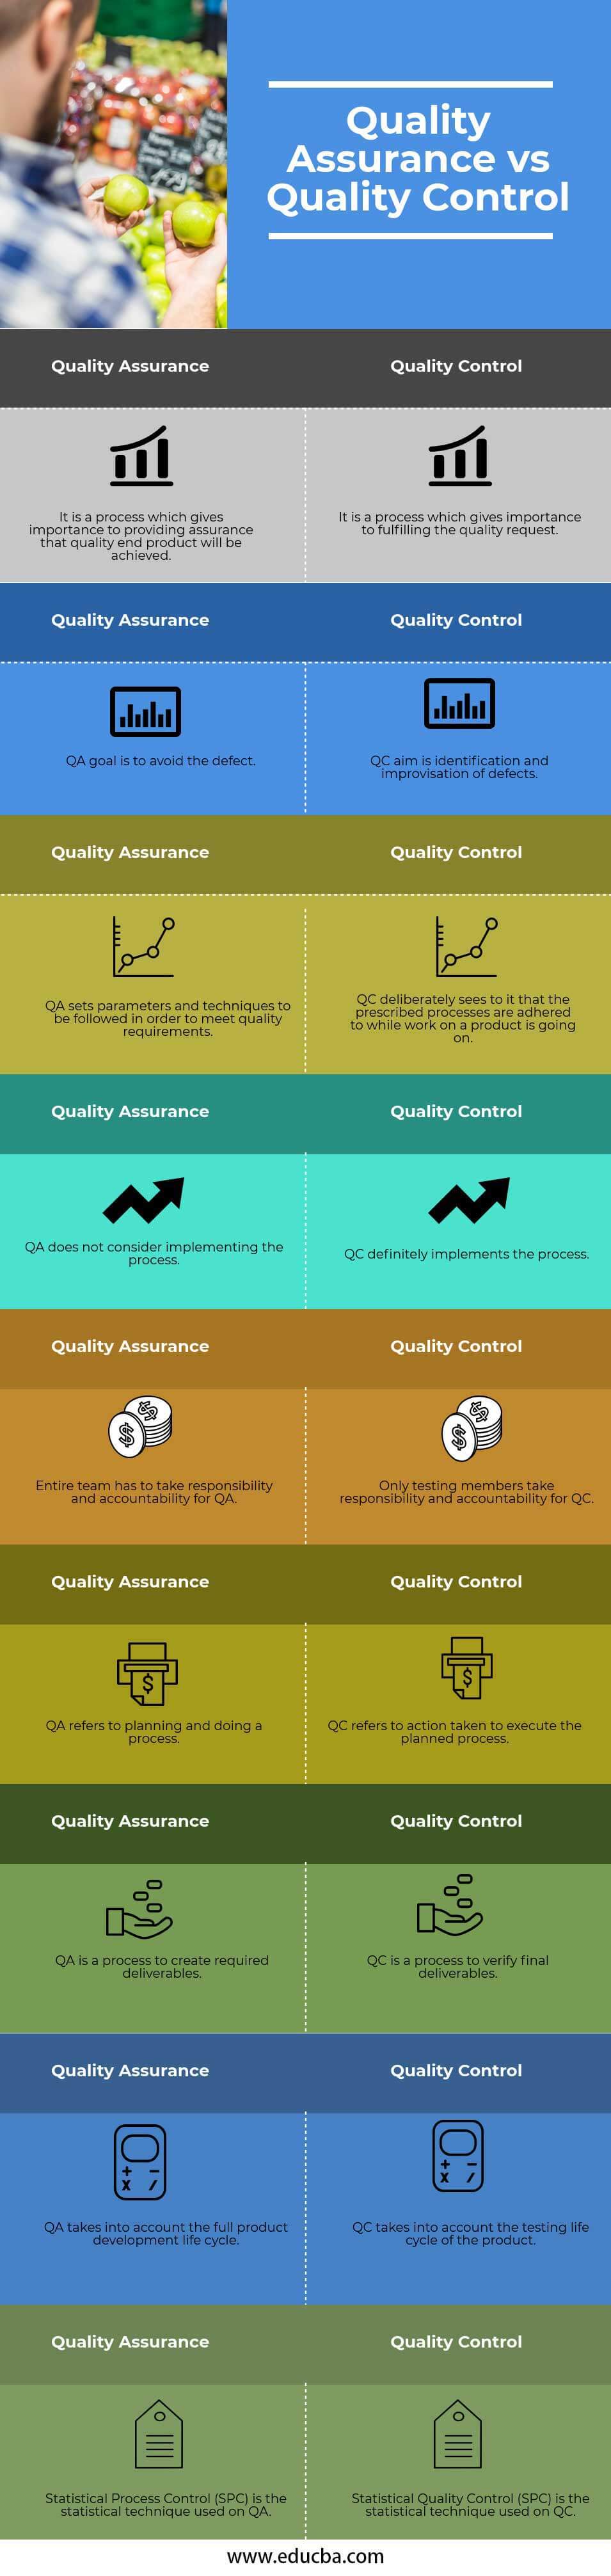 Quality Assurance vs Quality Control info